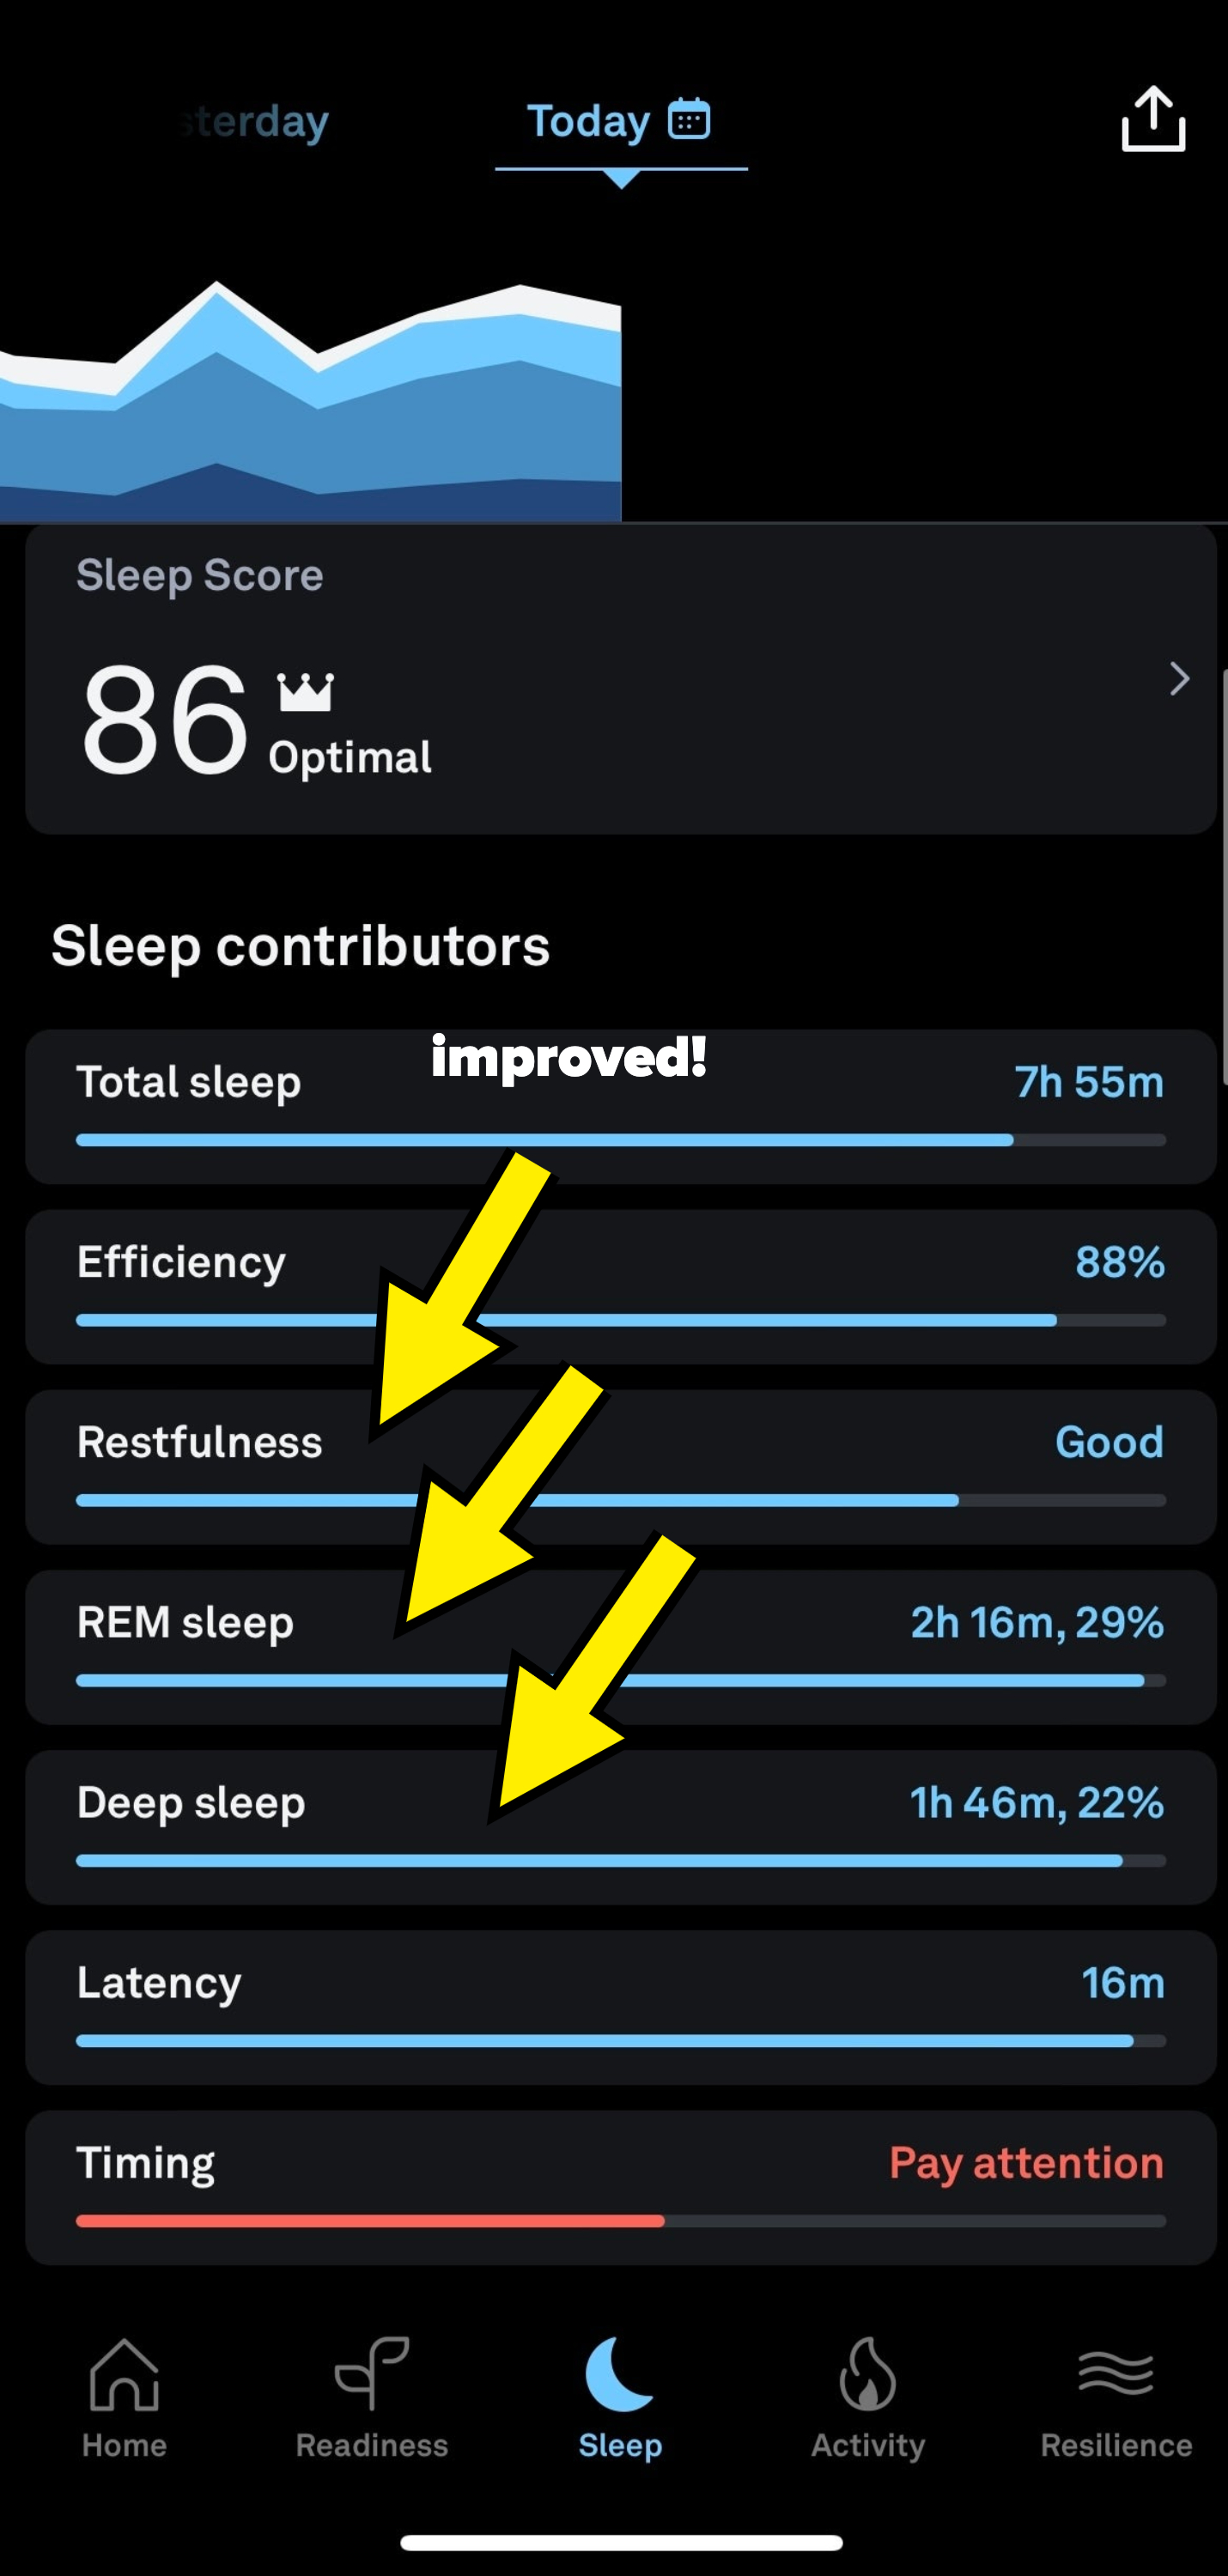 Sleep tracking app screen showing sleep score of 86, with 7h 55m total sleep, 88% efficiency and other sleep metrics